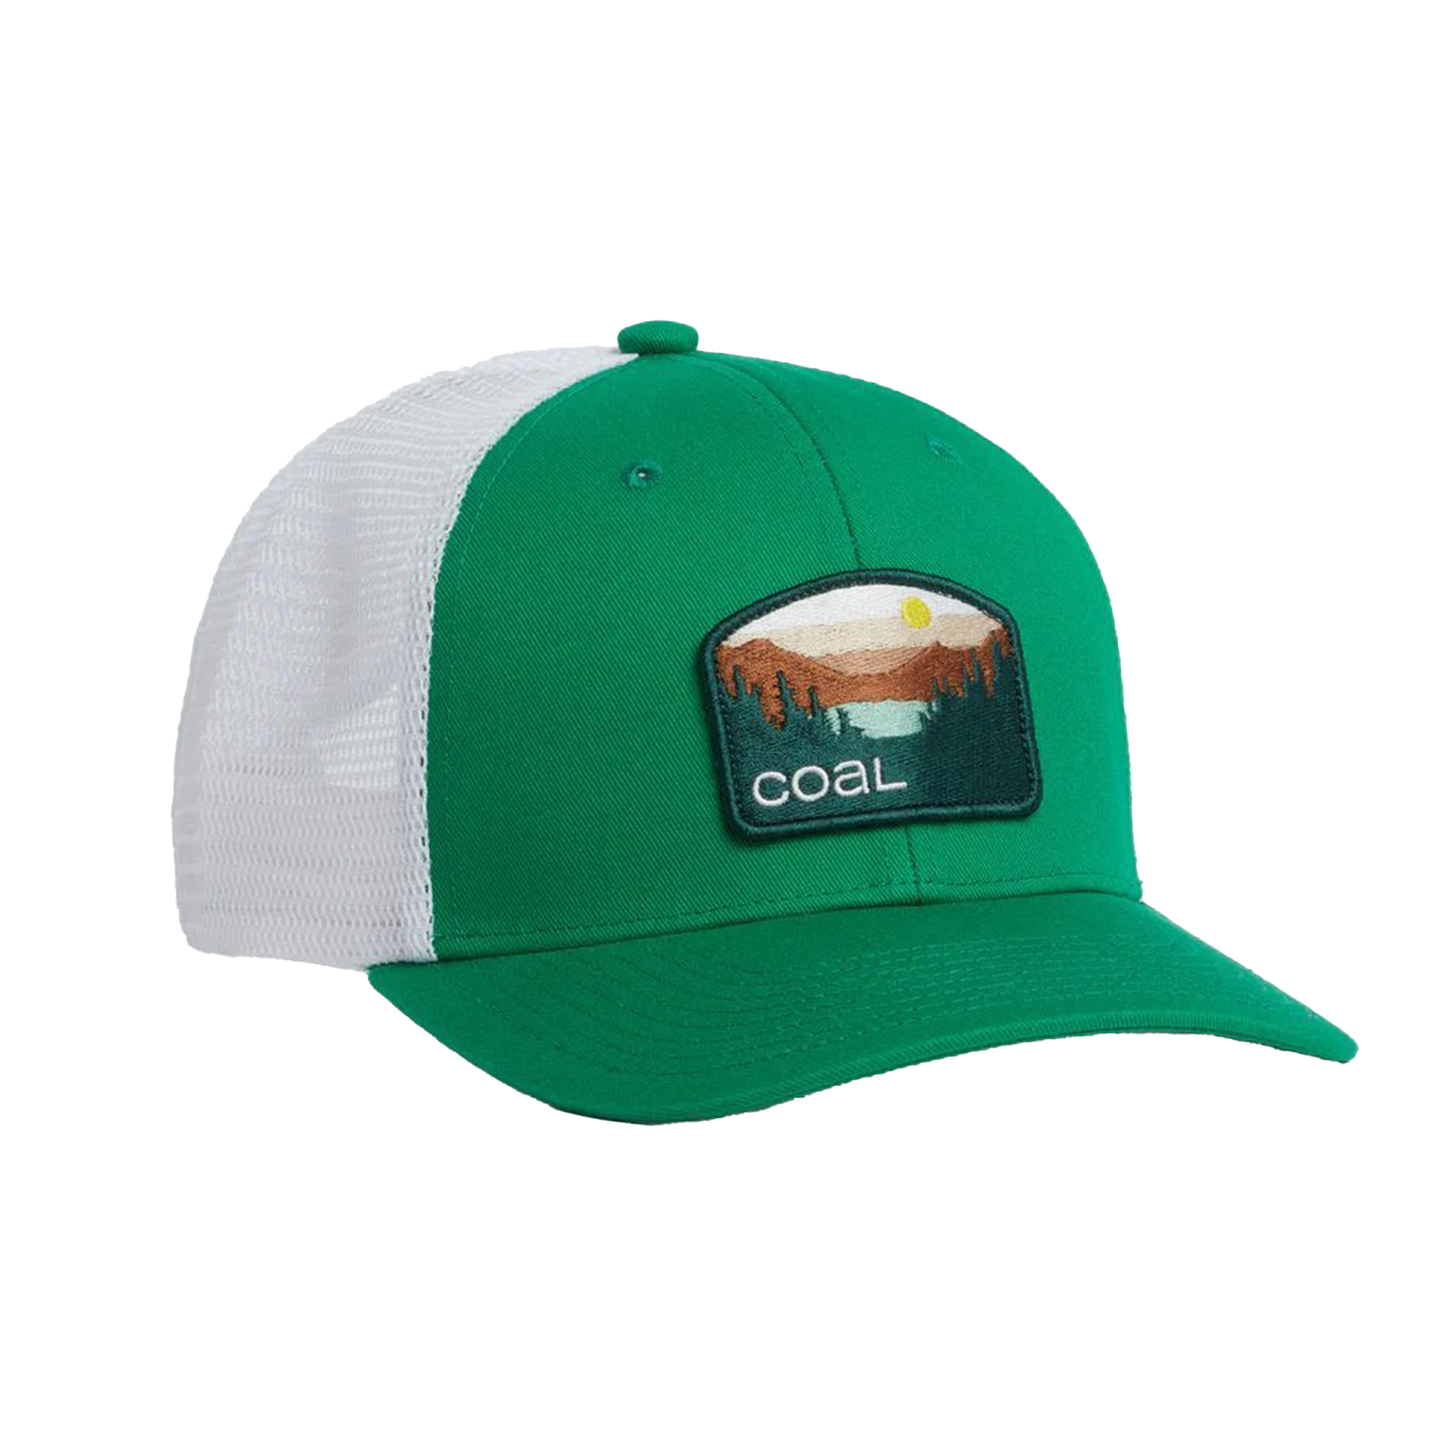 Coal Hauler One Low Hat Green OS Hats